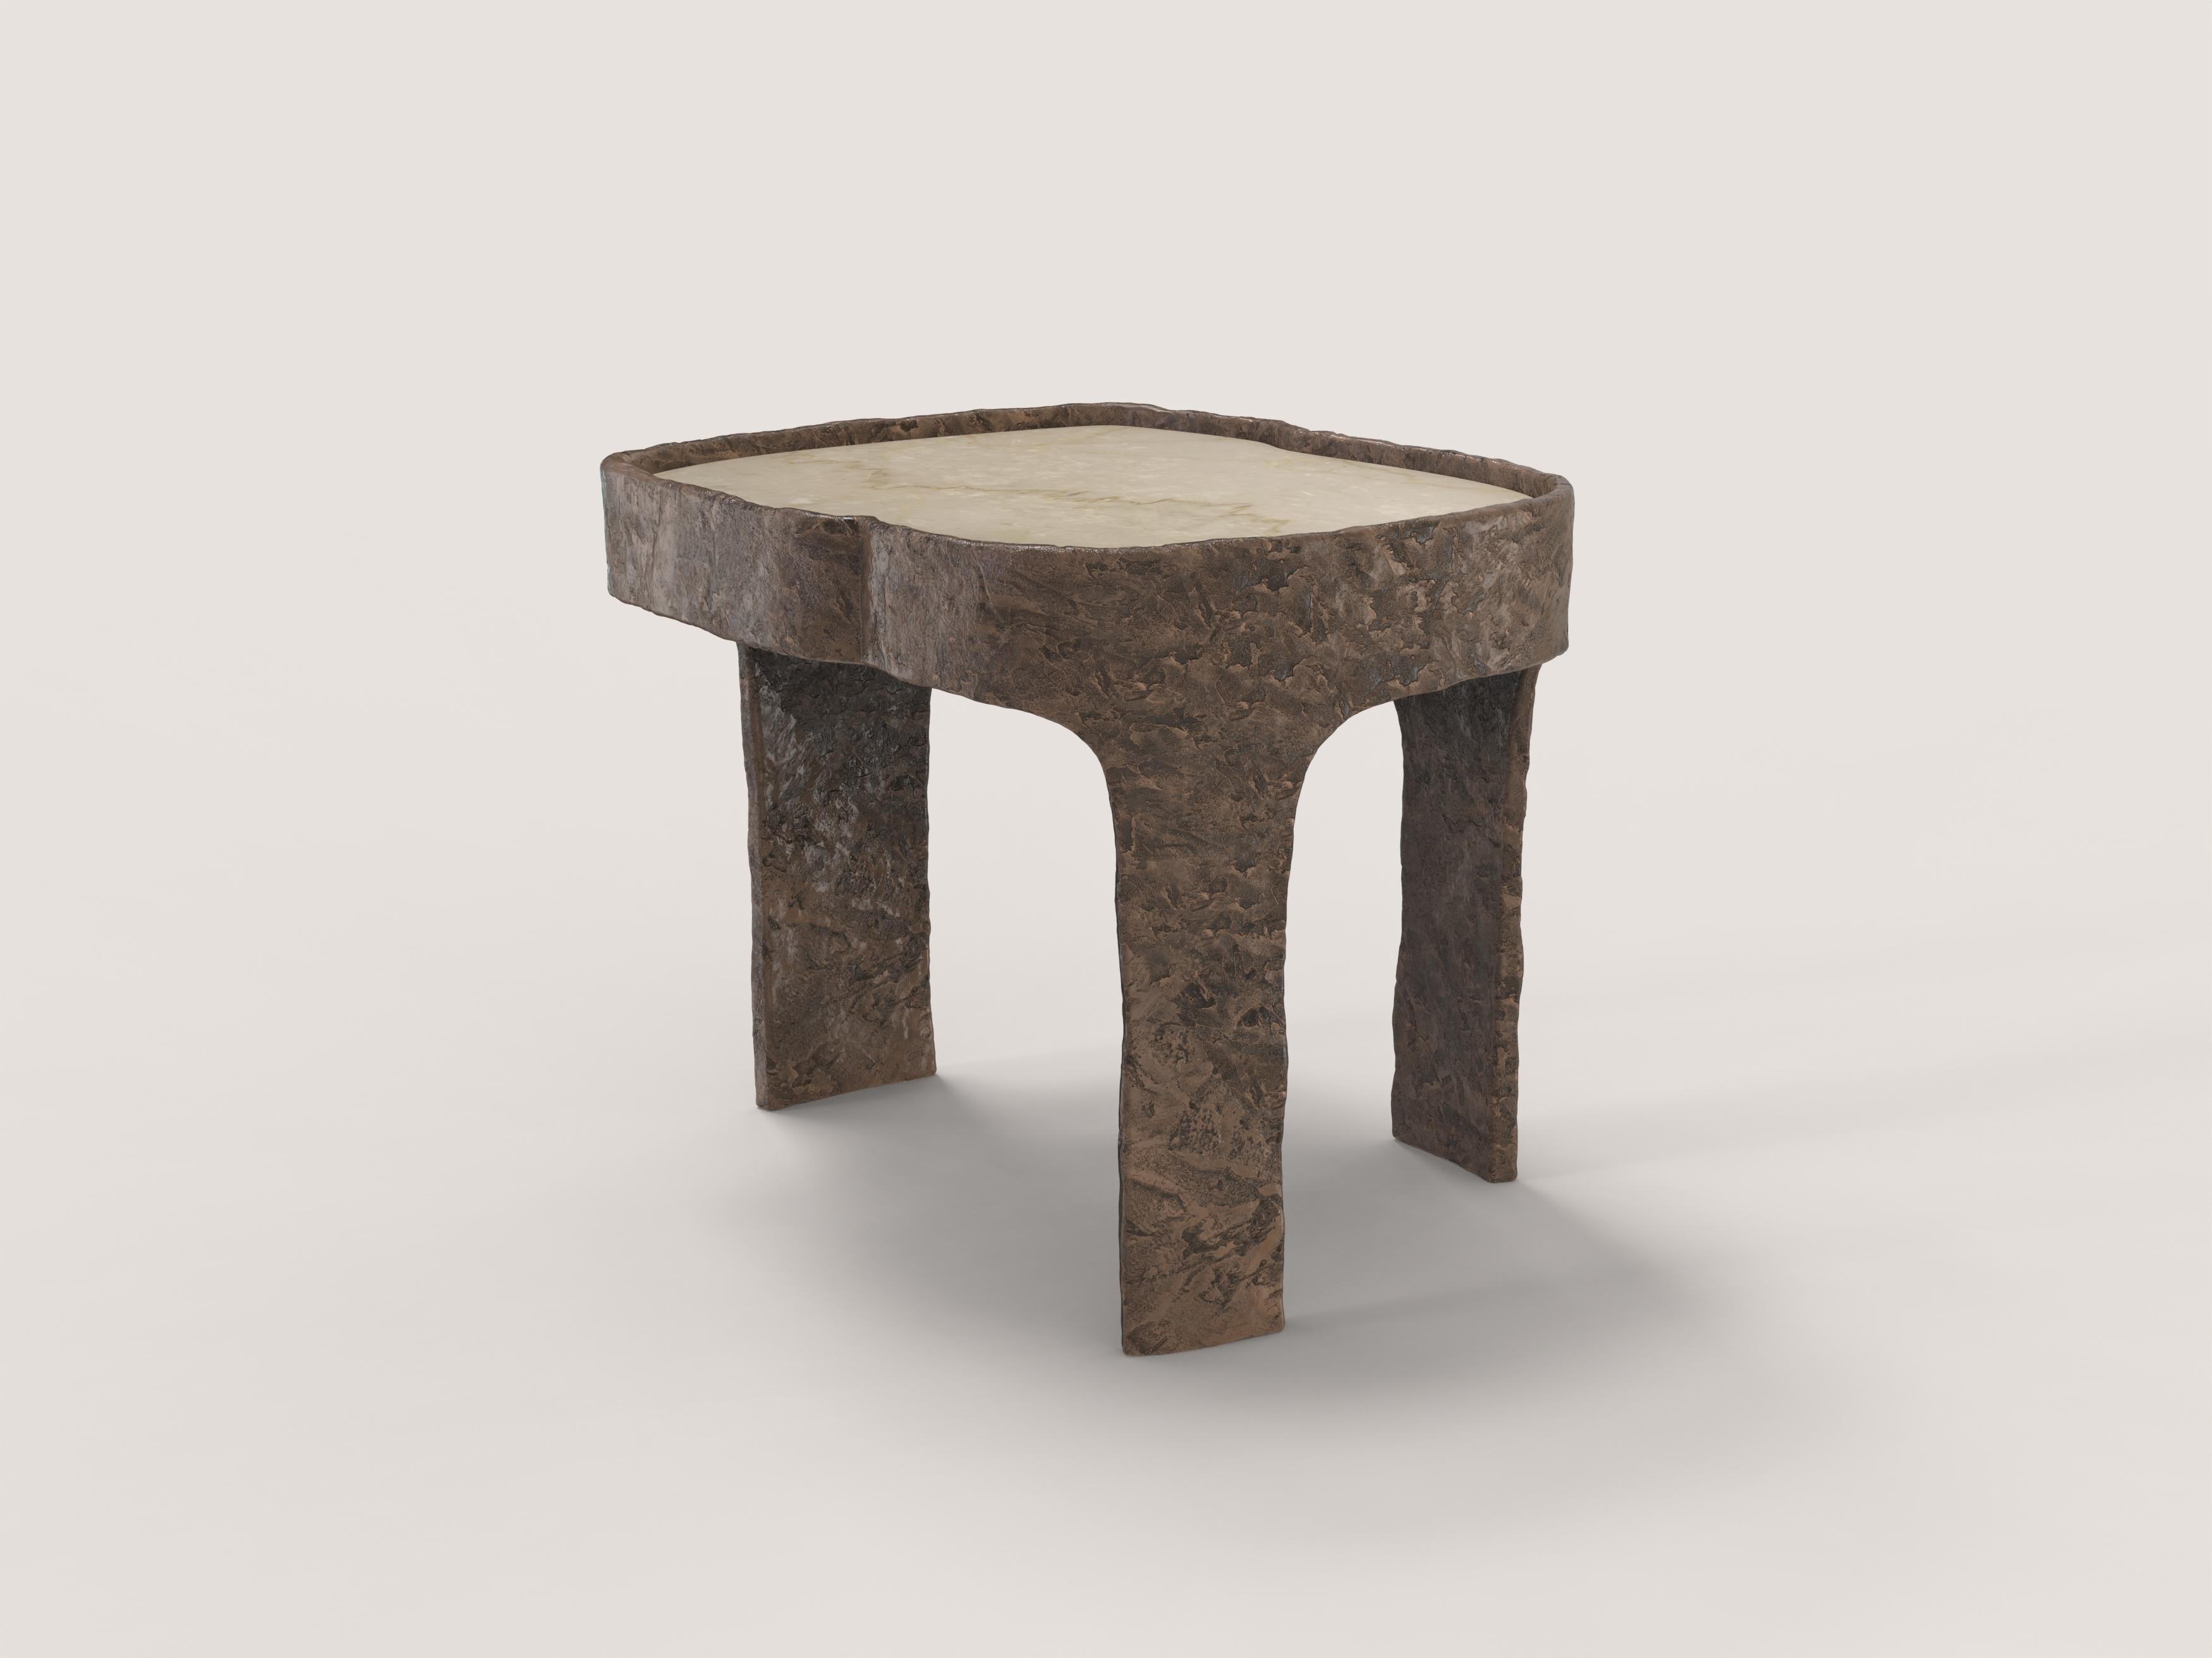 Contemporary Limited Edition Marble Bronze Table, Sumatra V1 by Edizione Limitata For Sale